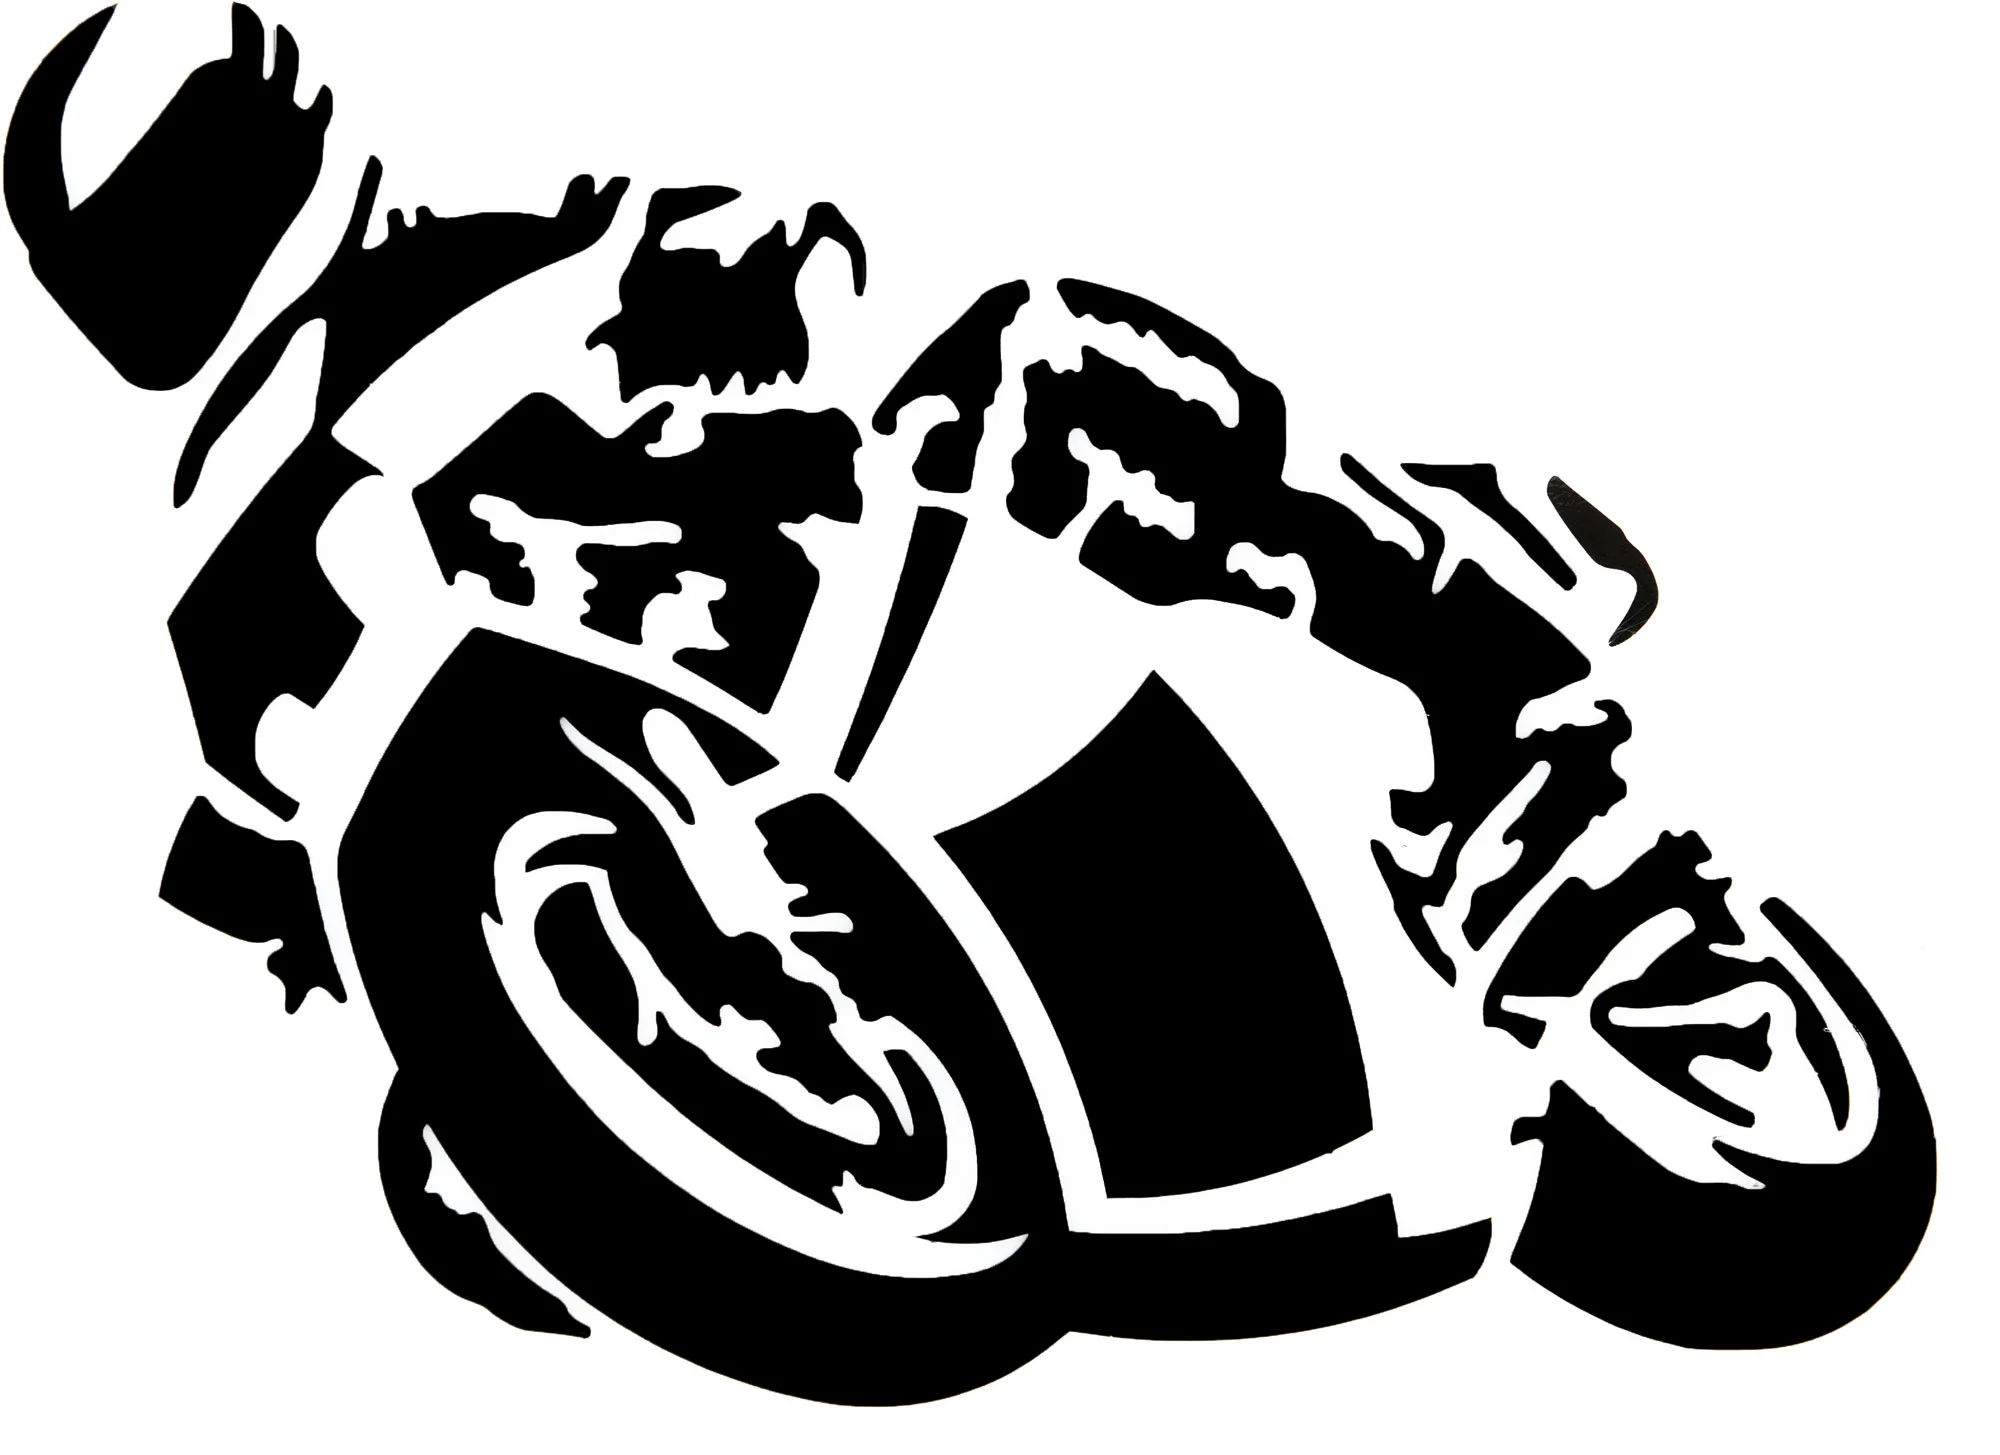 Louis 3D Aufkleber Motorrad Maße: 12x9cm, schwarz